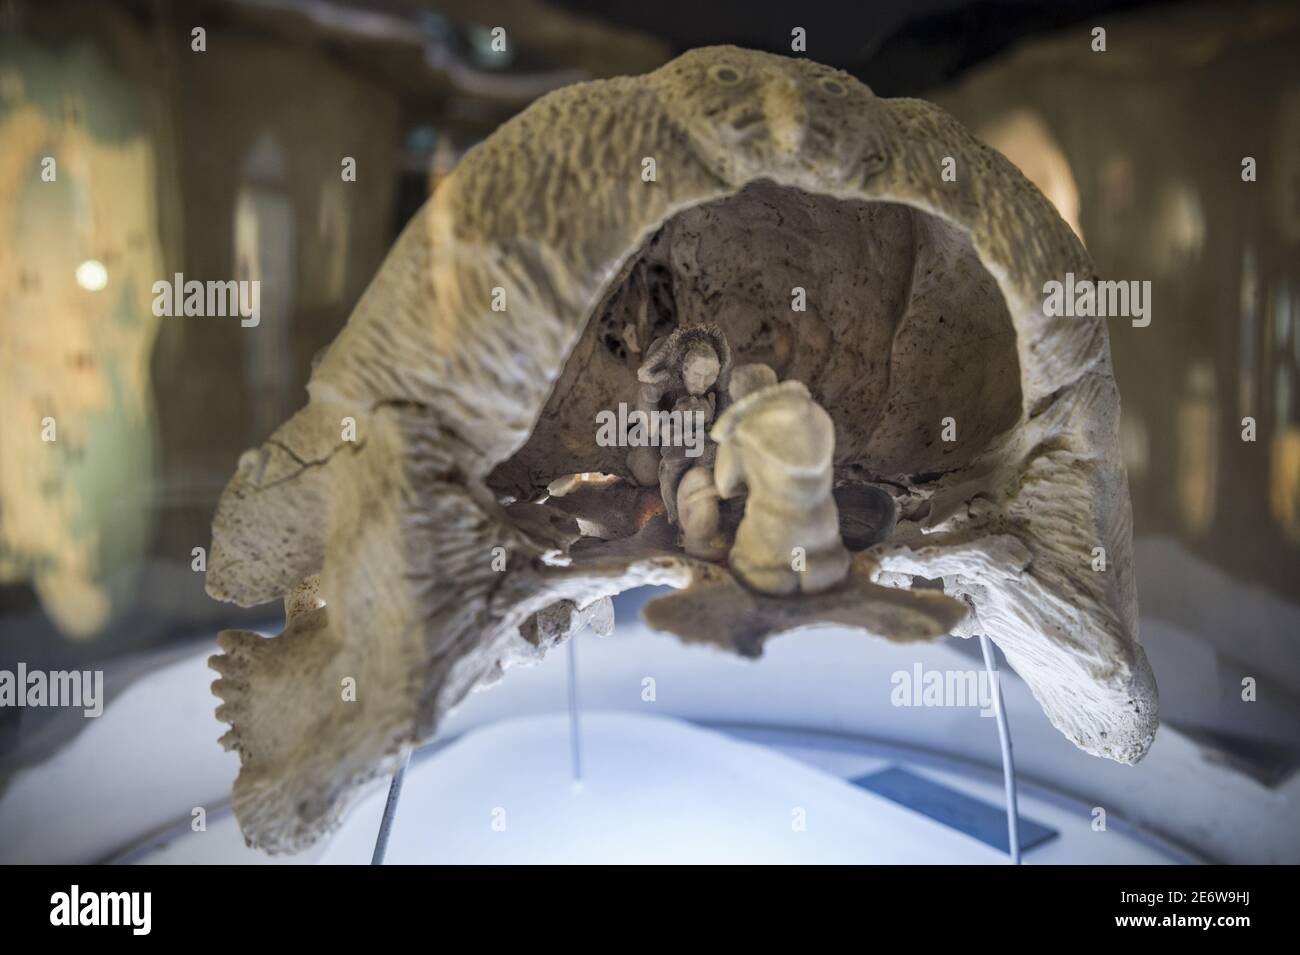 France, Brittany, Finist?re (29), Brest, Oc?anopolis, museum of the sea, Arctic scenes sculpted in a walrus skull, artist Lukie AIRUT, Iglulik, Nunavut, Canada (1999) Stock Photo